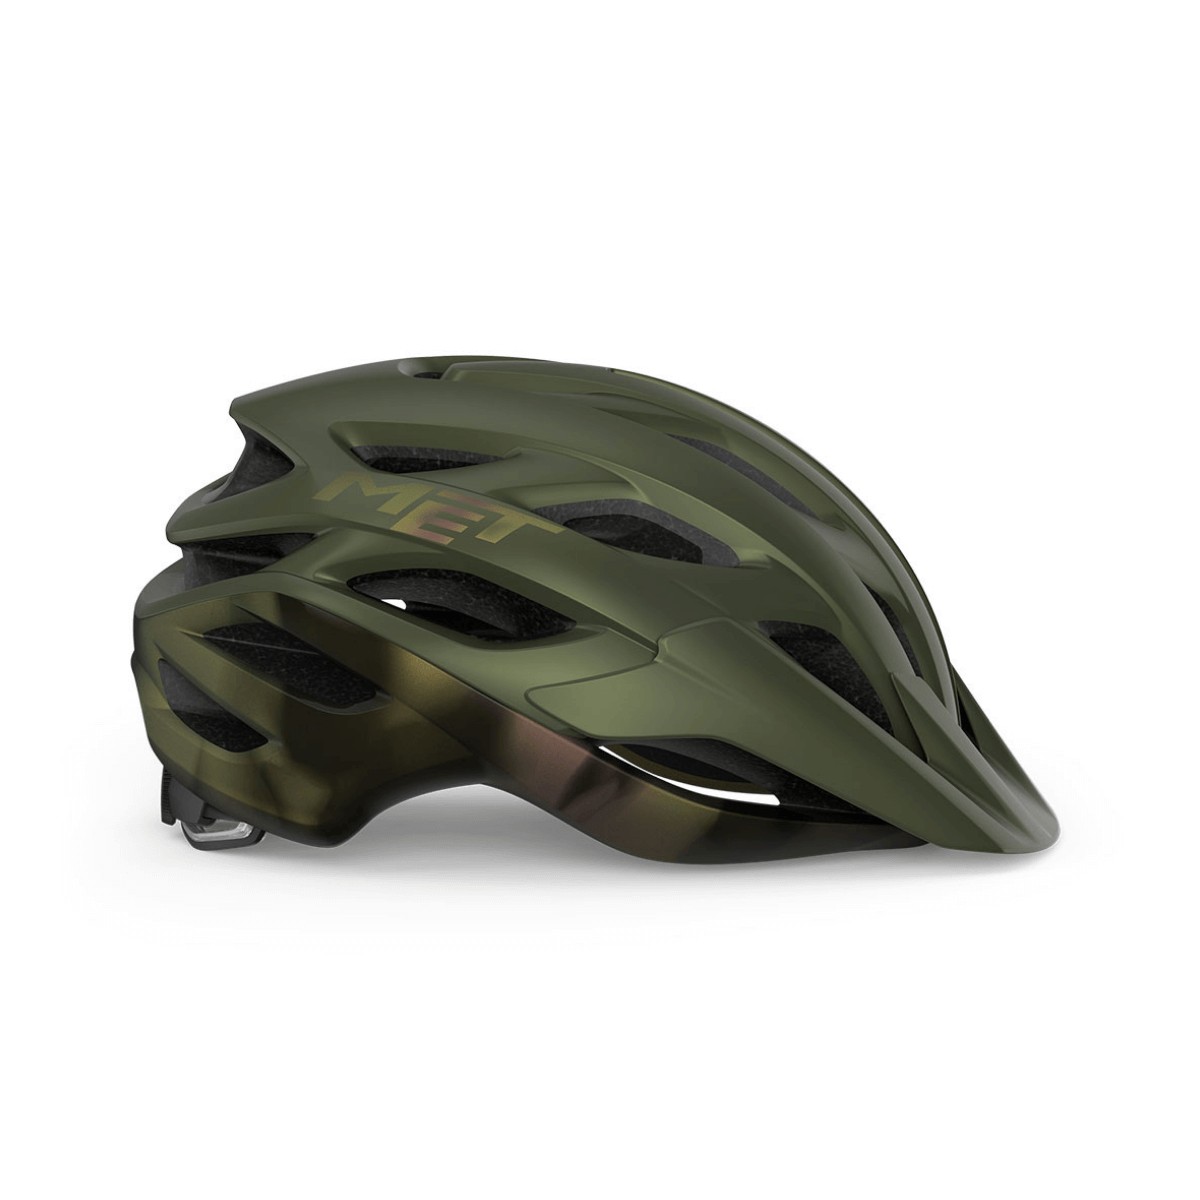 Met Veleno Helmet Olive Iridiscent Mate, Size M (56-58 cm)